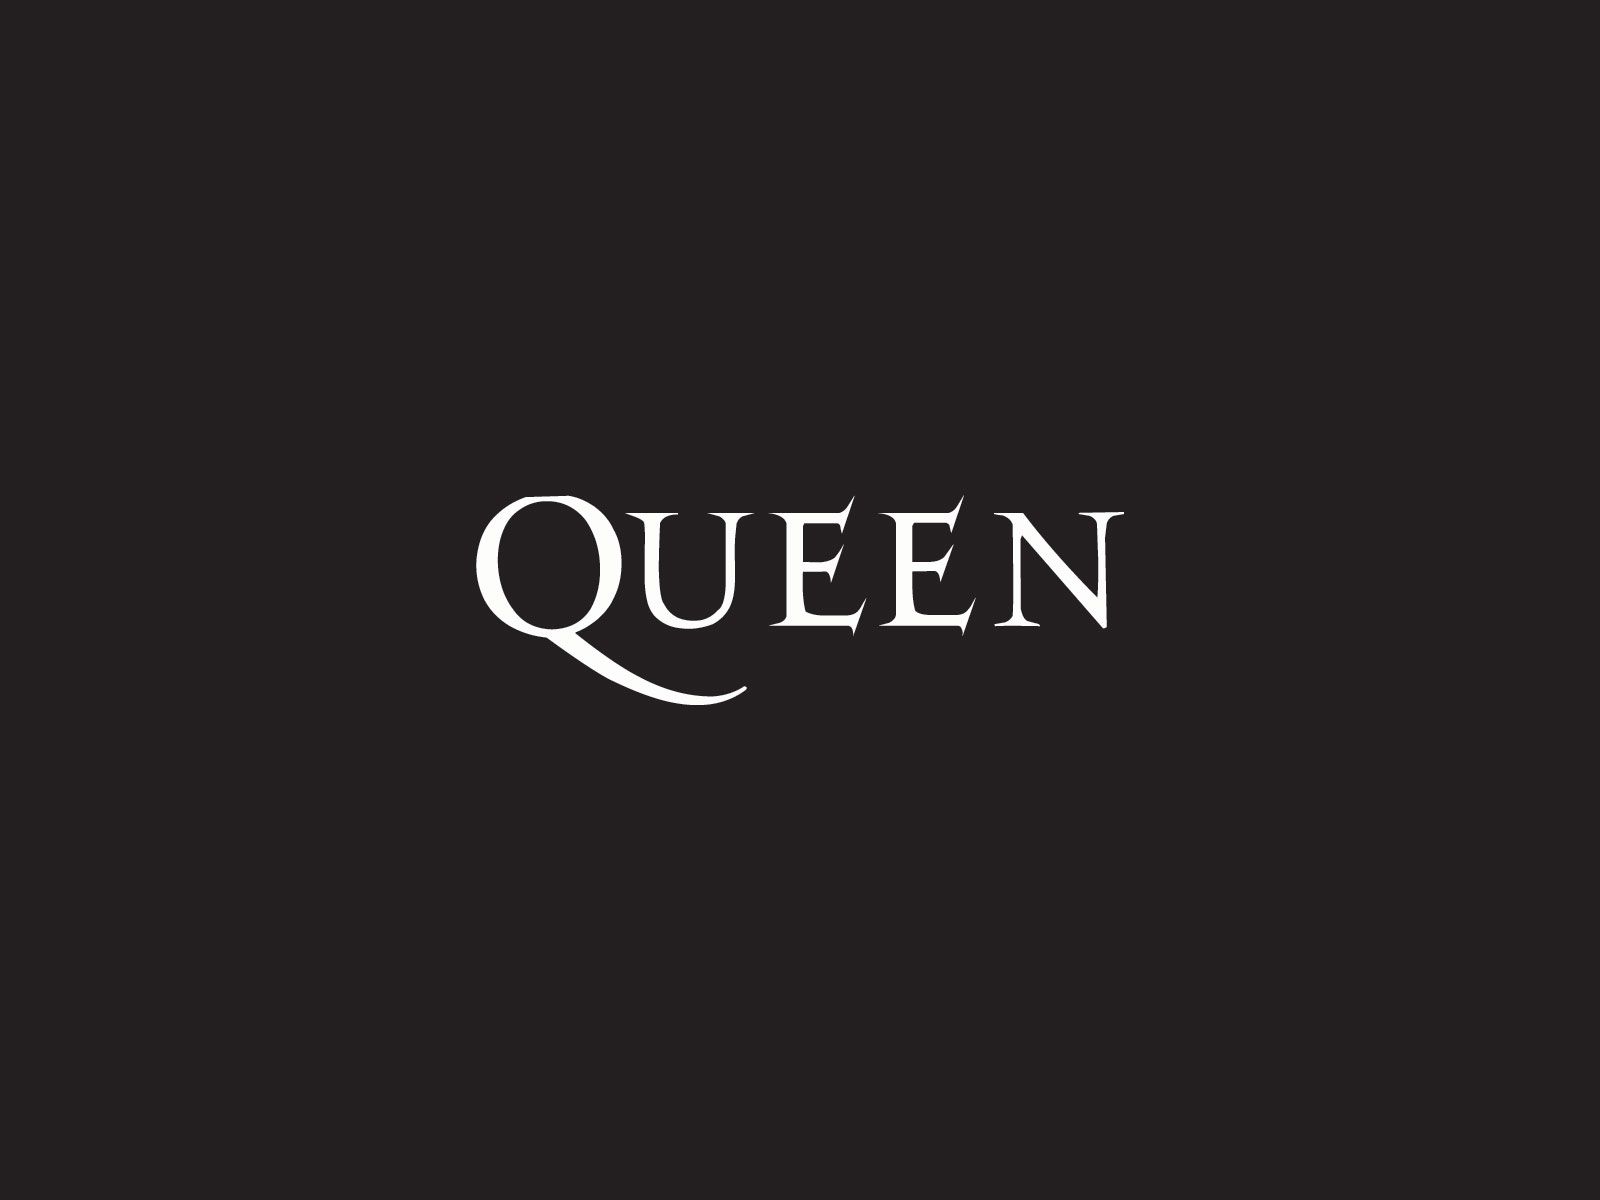 SuperQueenFan667 | Queen band, Rock band logos, Band logos